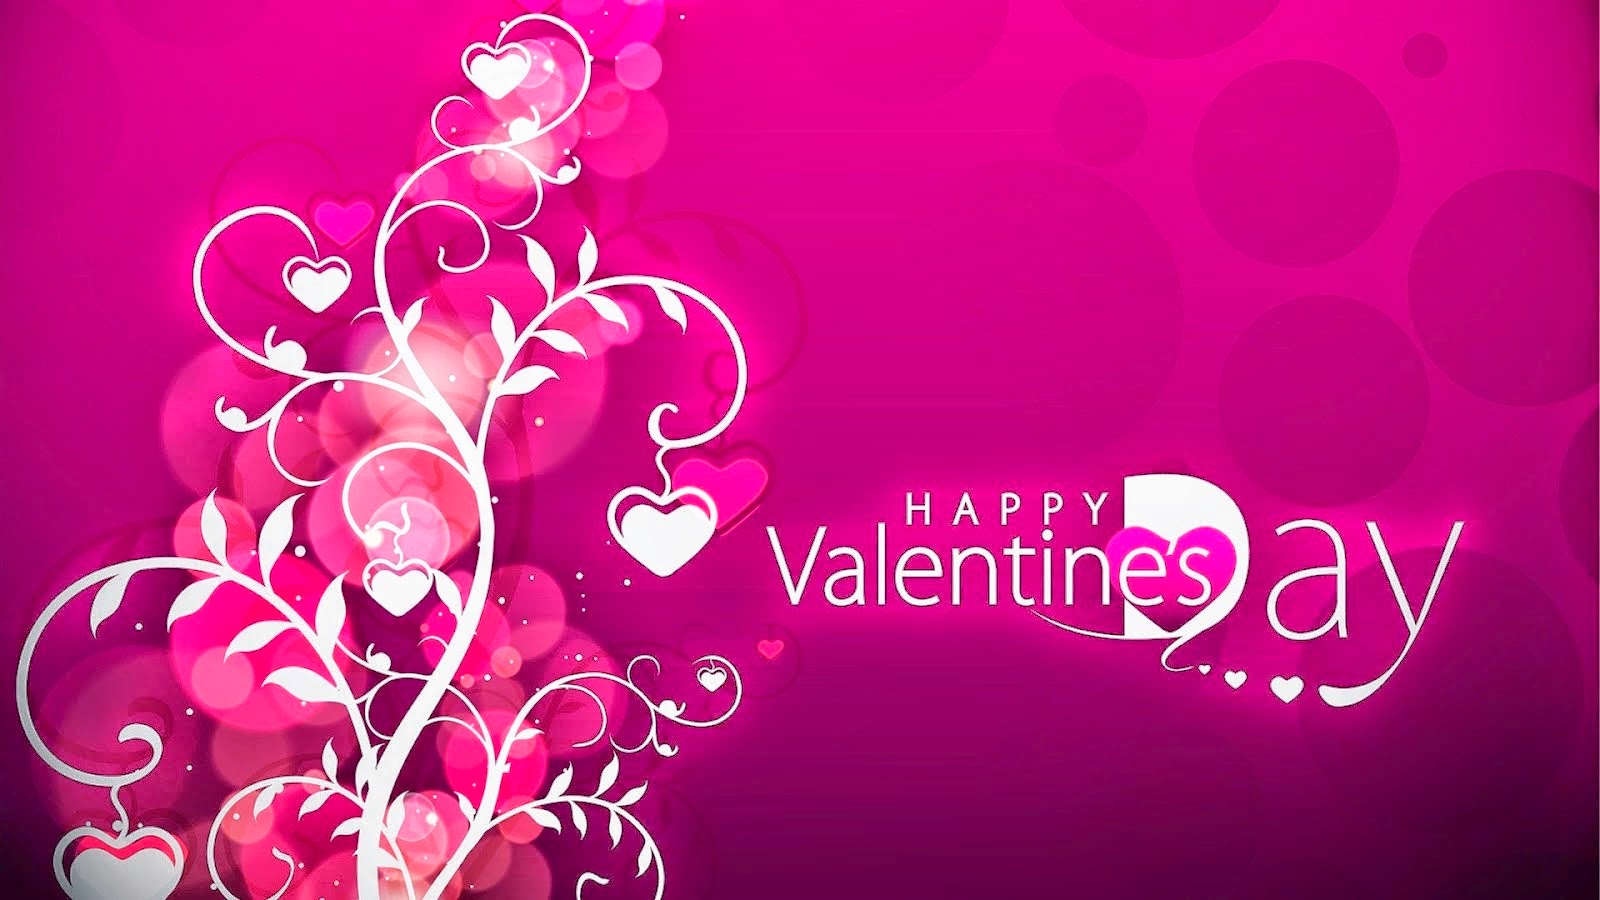 Happy Valentine s Day 2016 valentin day image quotes 2016 cute valentine day quotes valentines day pictures and quotes valentine day images